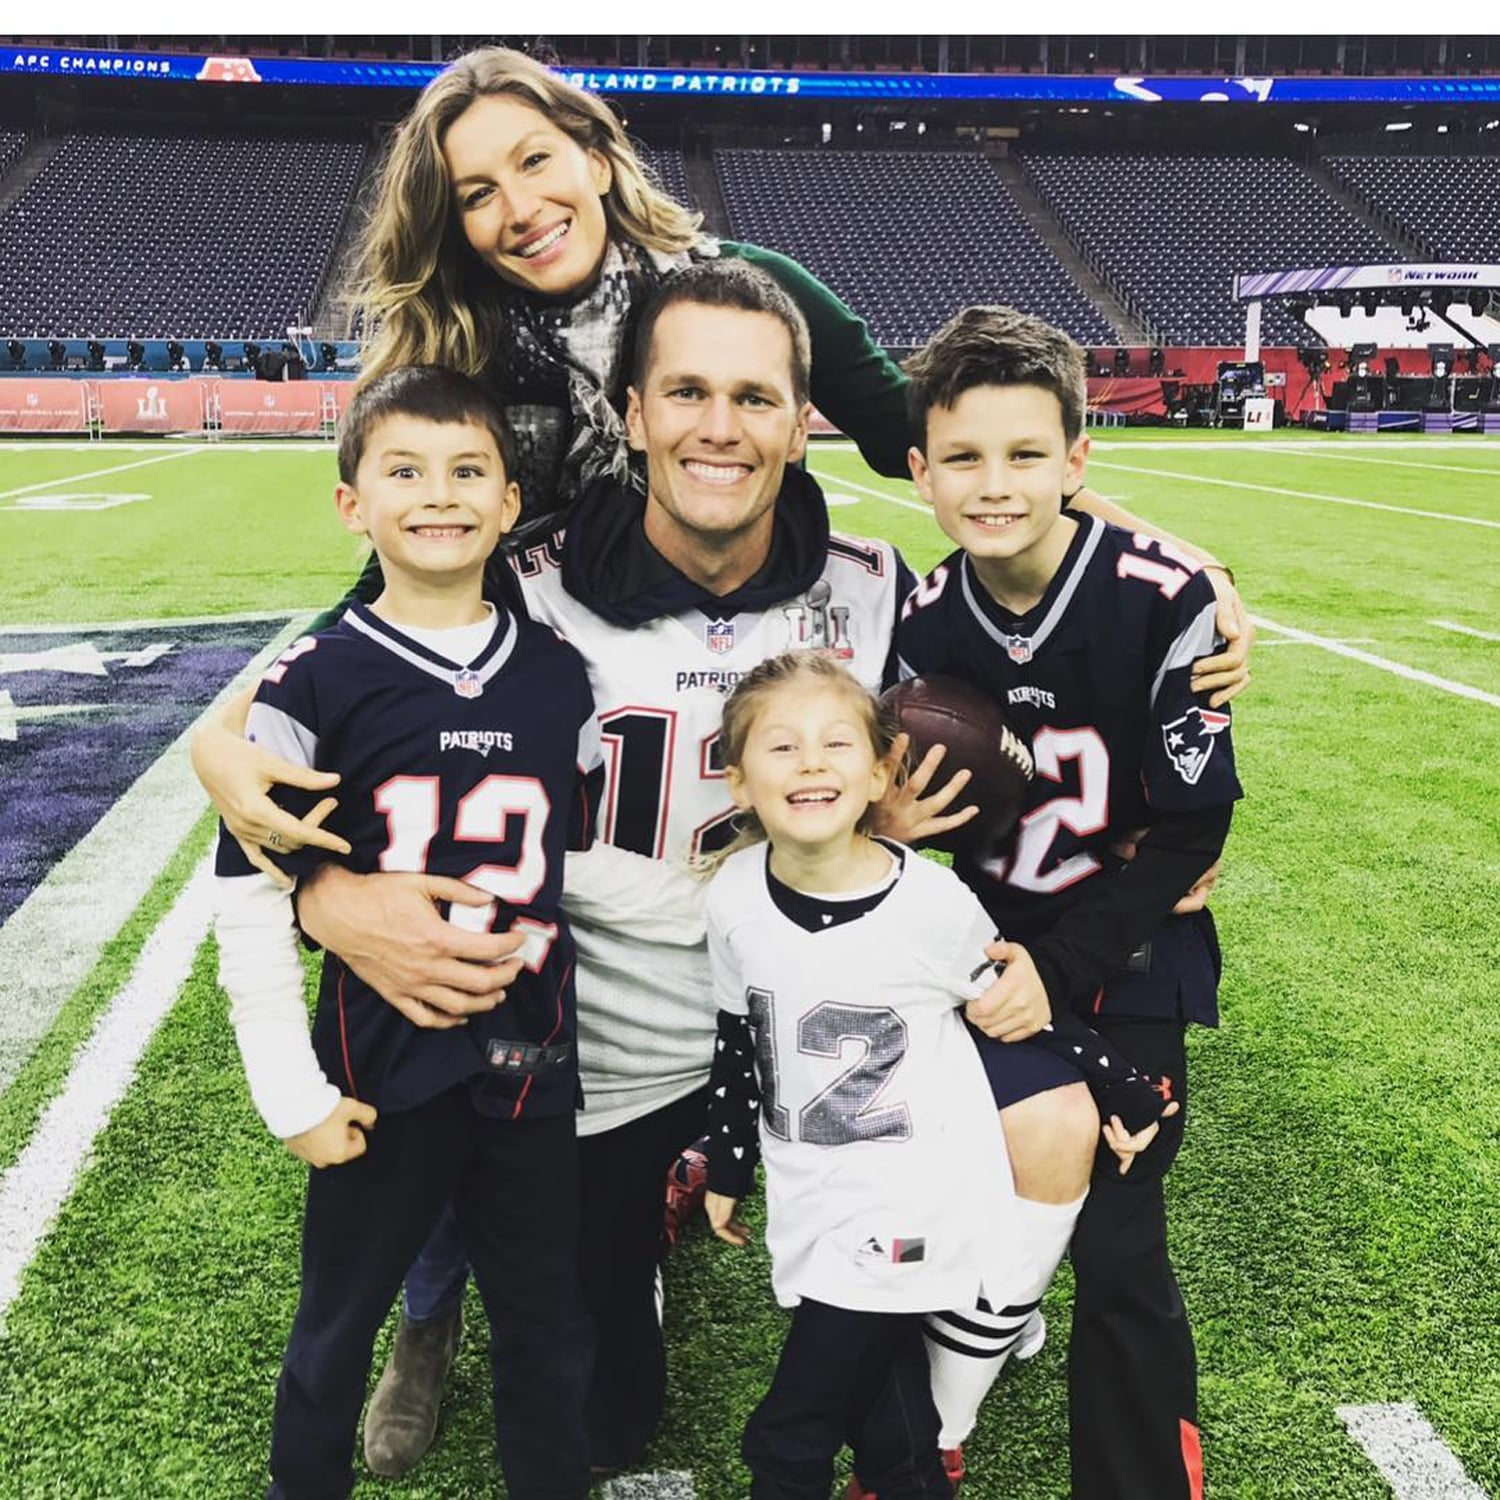 Does Tom Brady want his kids to go into sport?